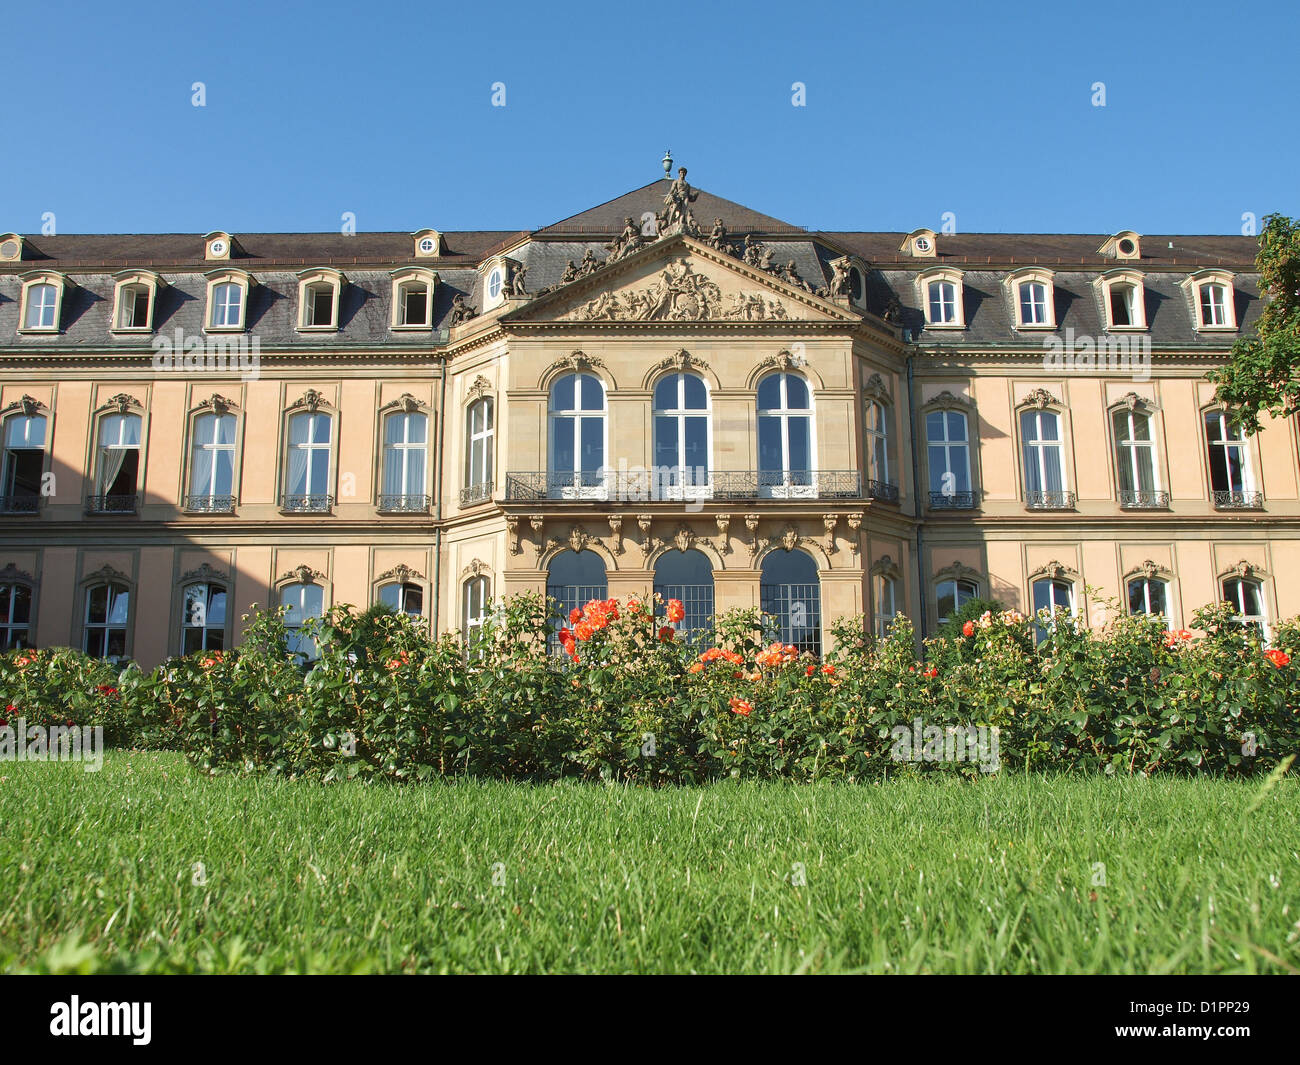 Neues Schloss (New Castle) Stuttgart Germany Stock Photo